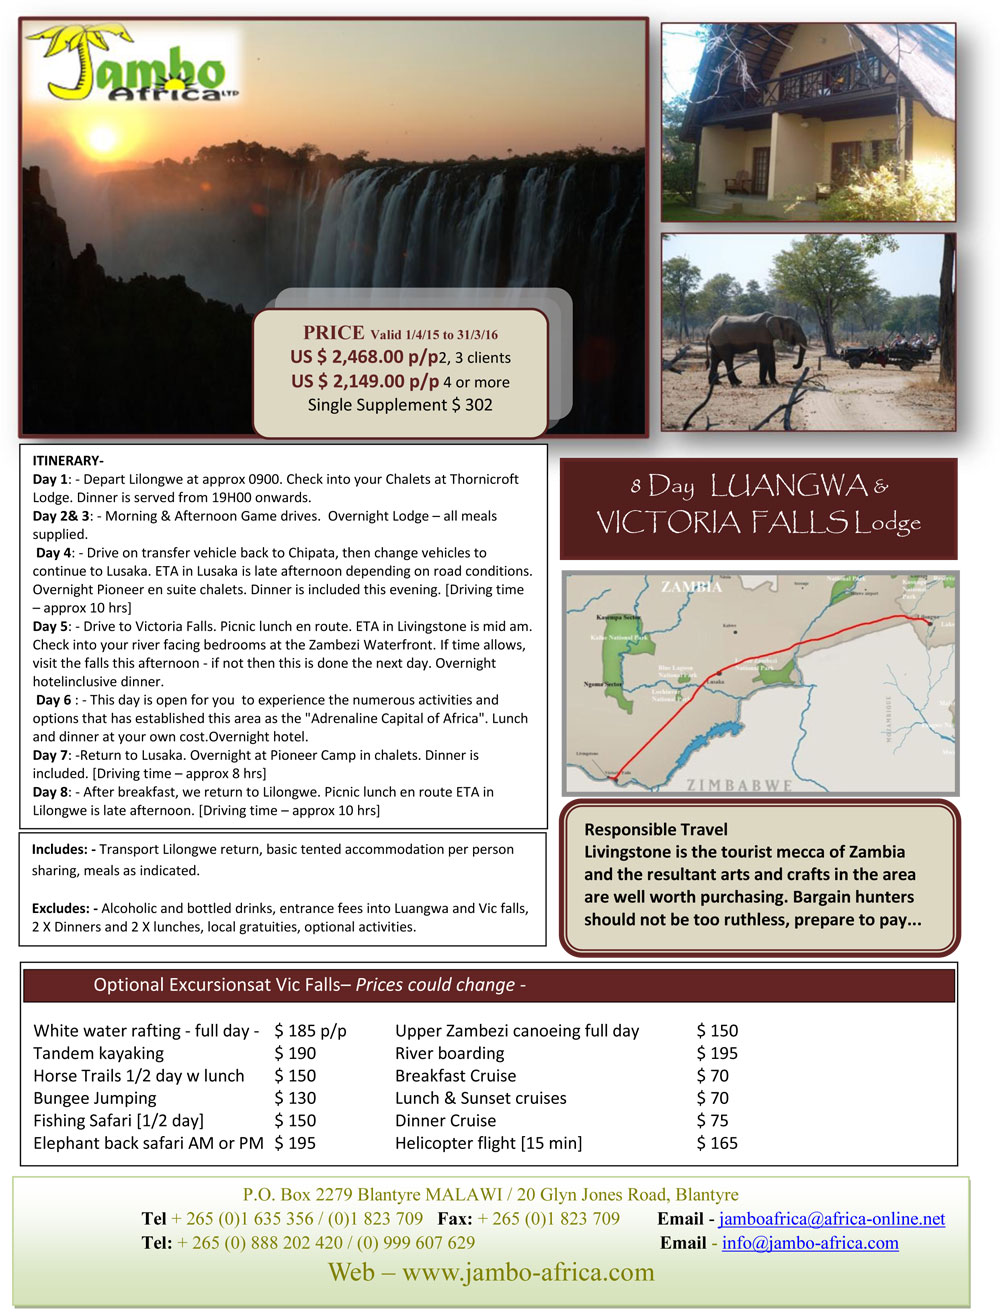 8 day Luangwa & Victoria Falls Lodge